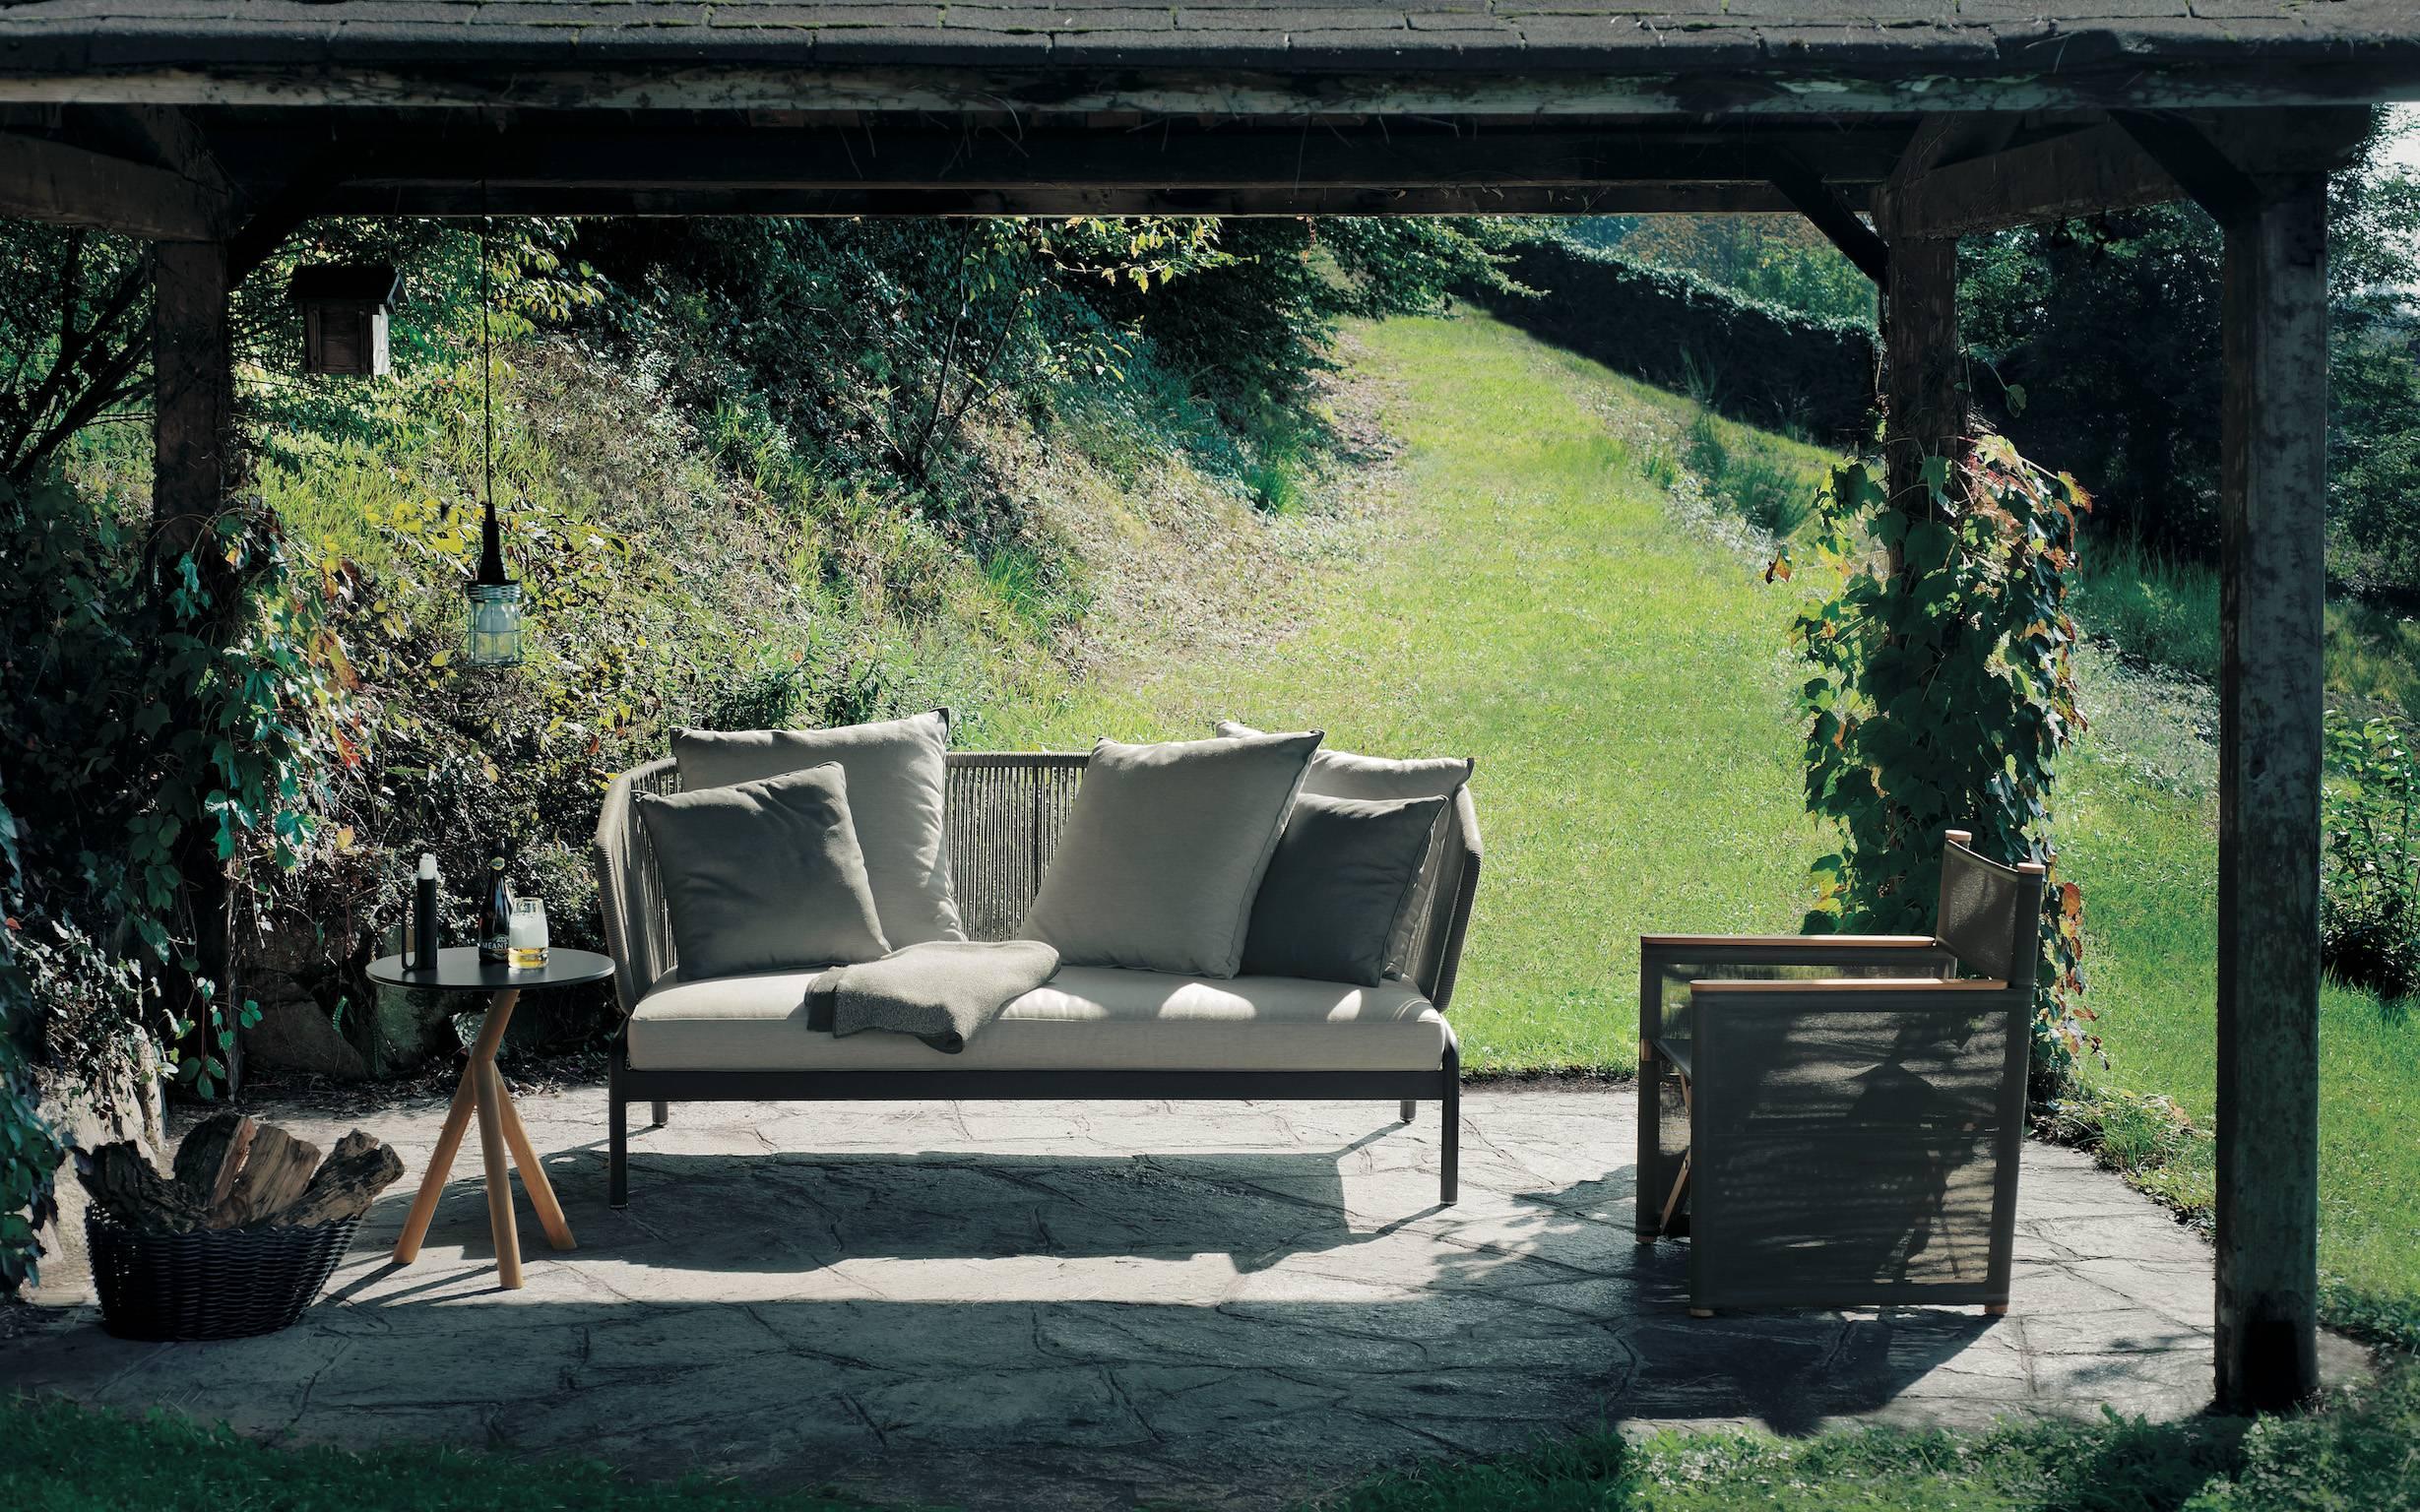 Italian Roda Spool Two-Seat Sofa for Outdoor/Indoor Use by Rodolfo Dordoni For Sale